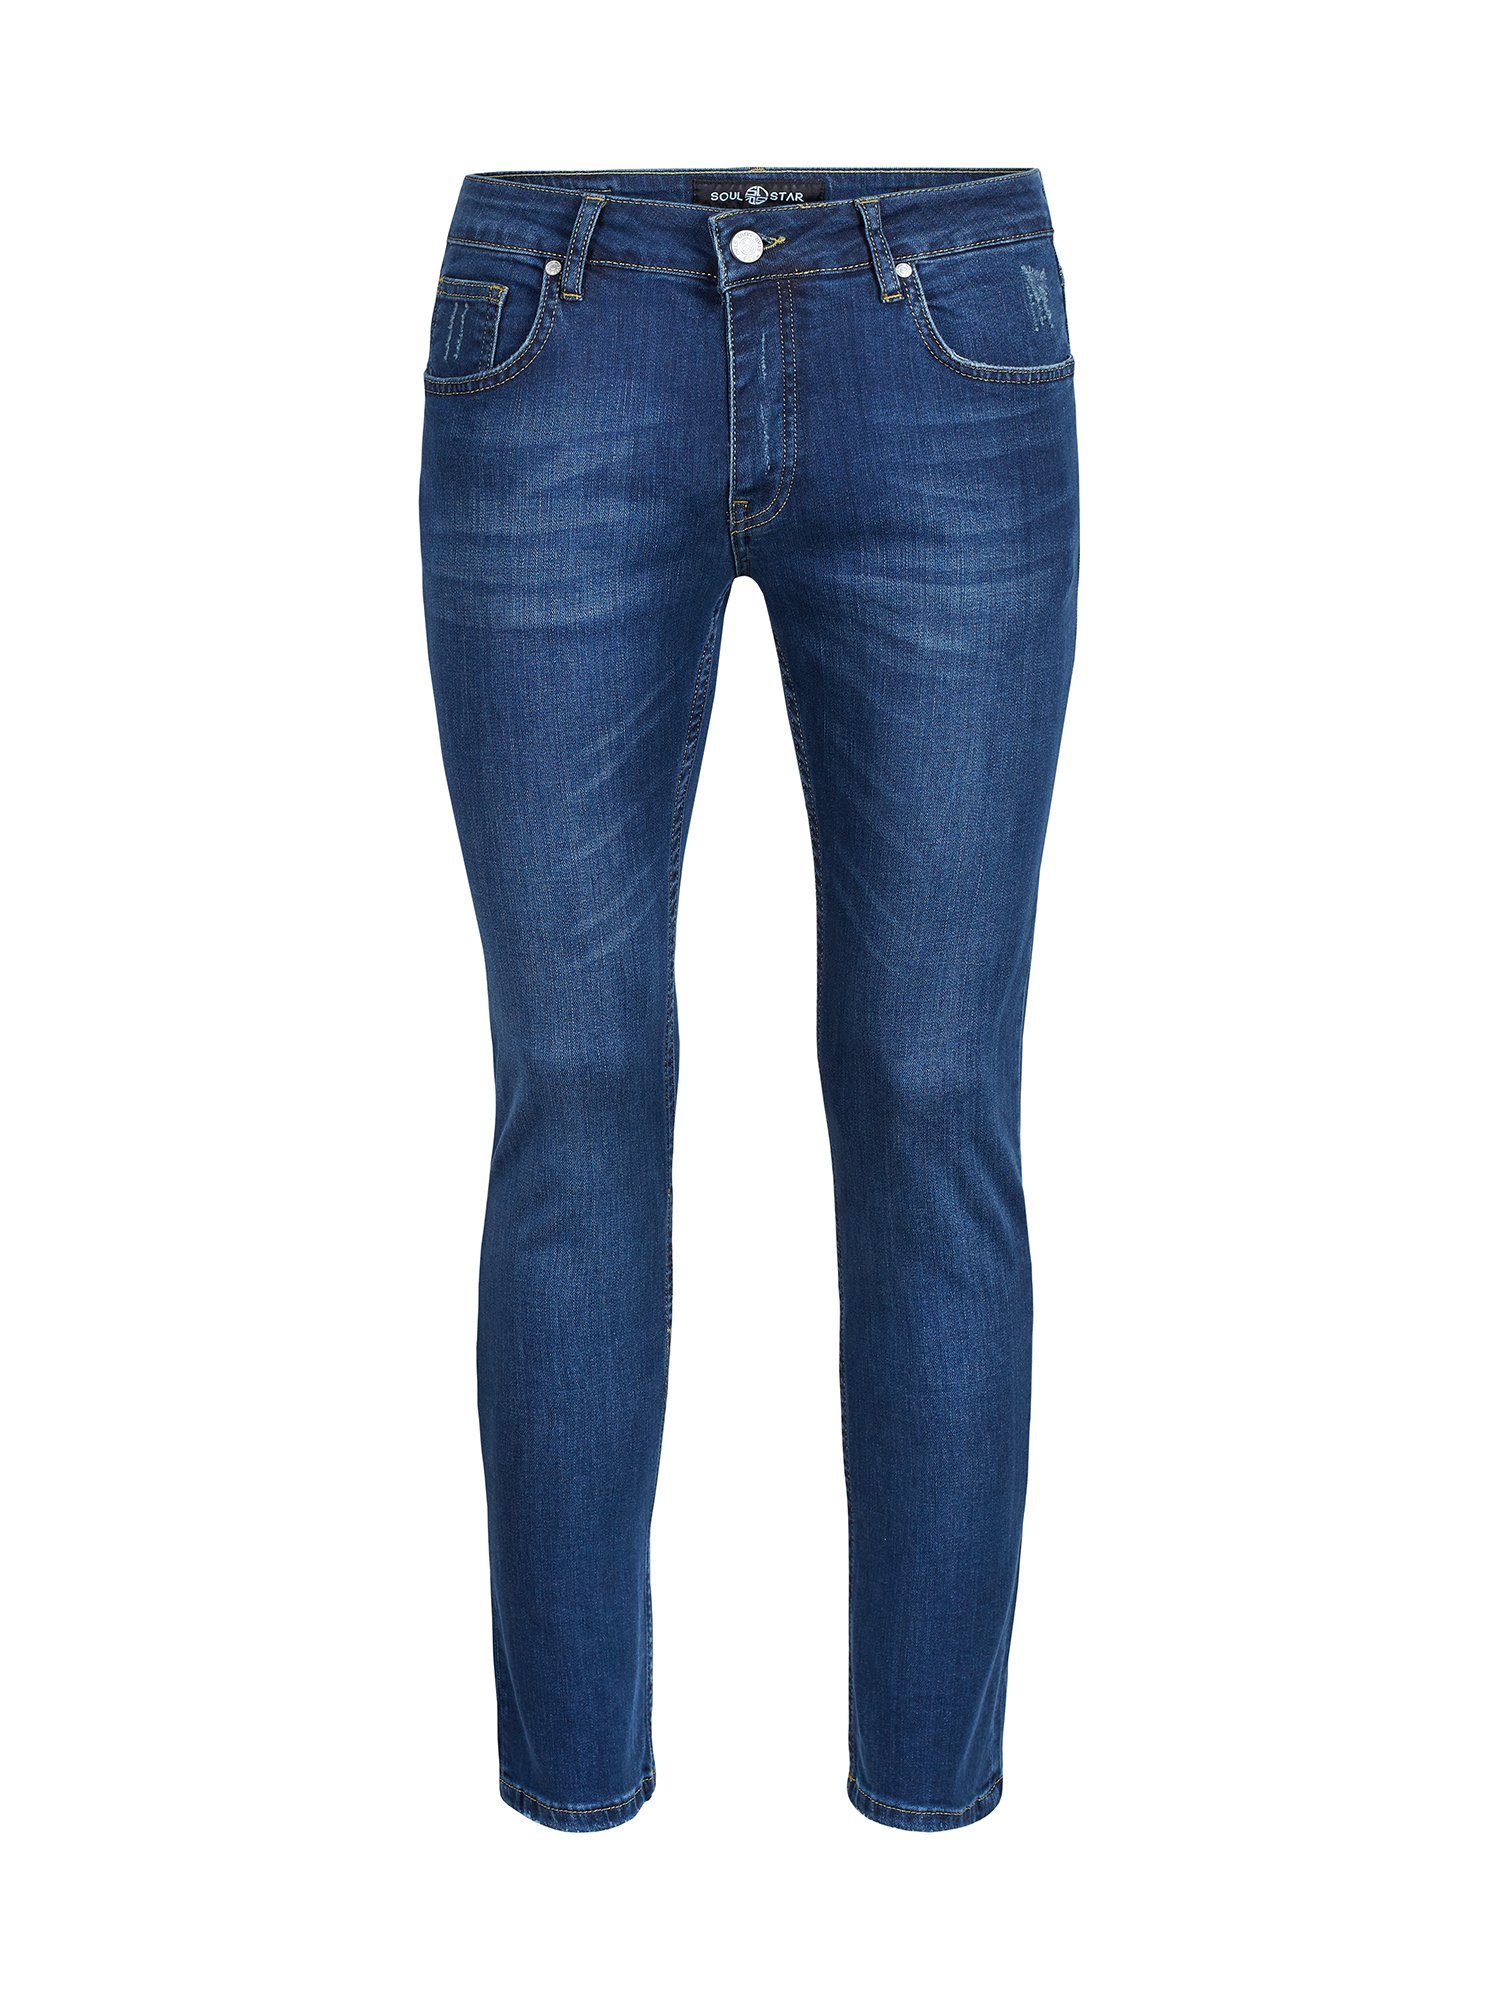 SOULSTAR Regular-fit-Jeans im MADRID dunkelblau Used-Wash-Stil